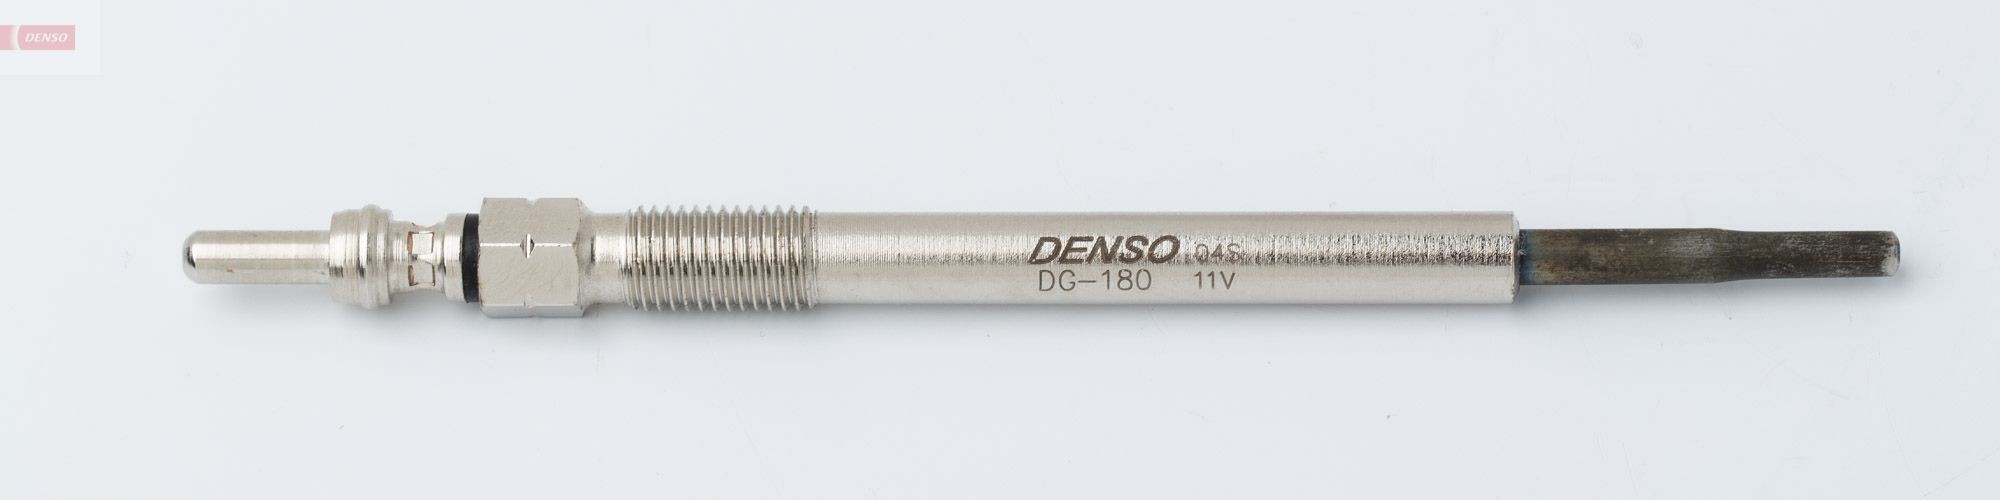 Mazda DEMIO Glow plug DENSO DG-180 cheap